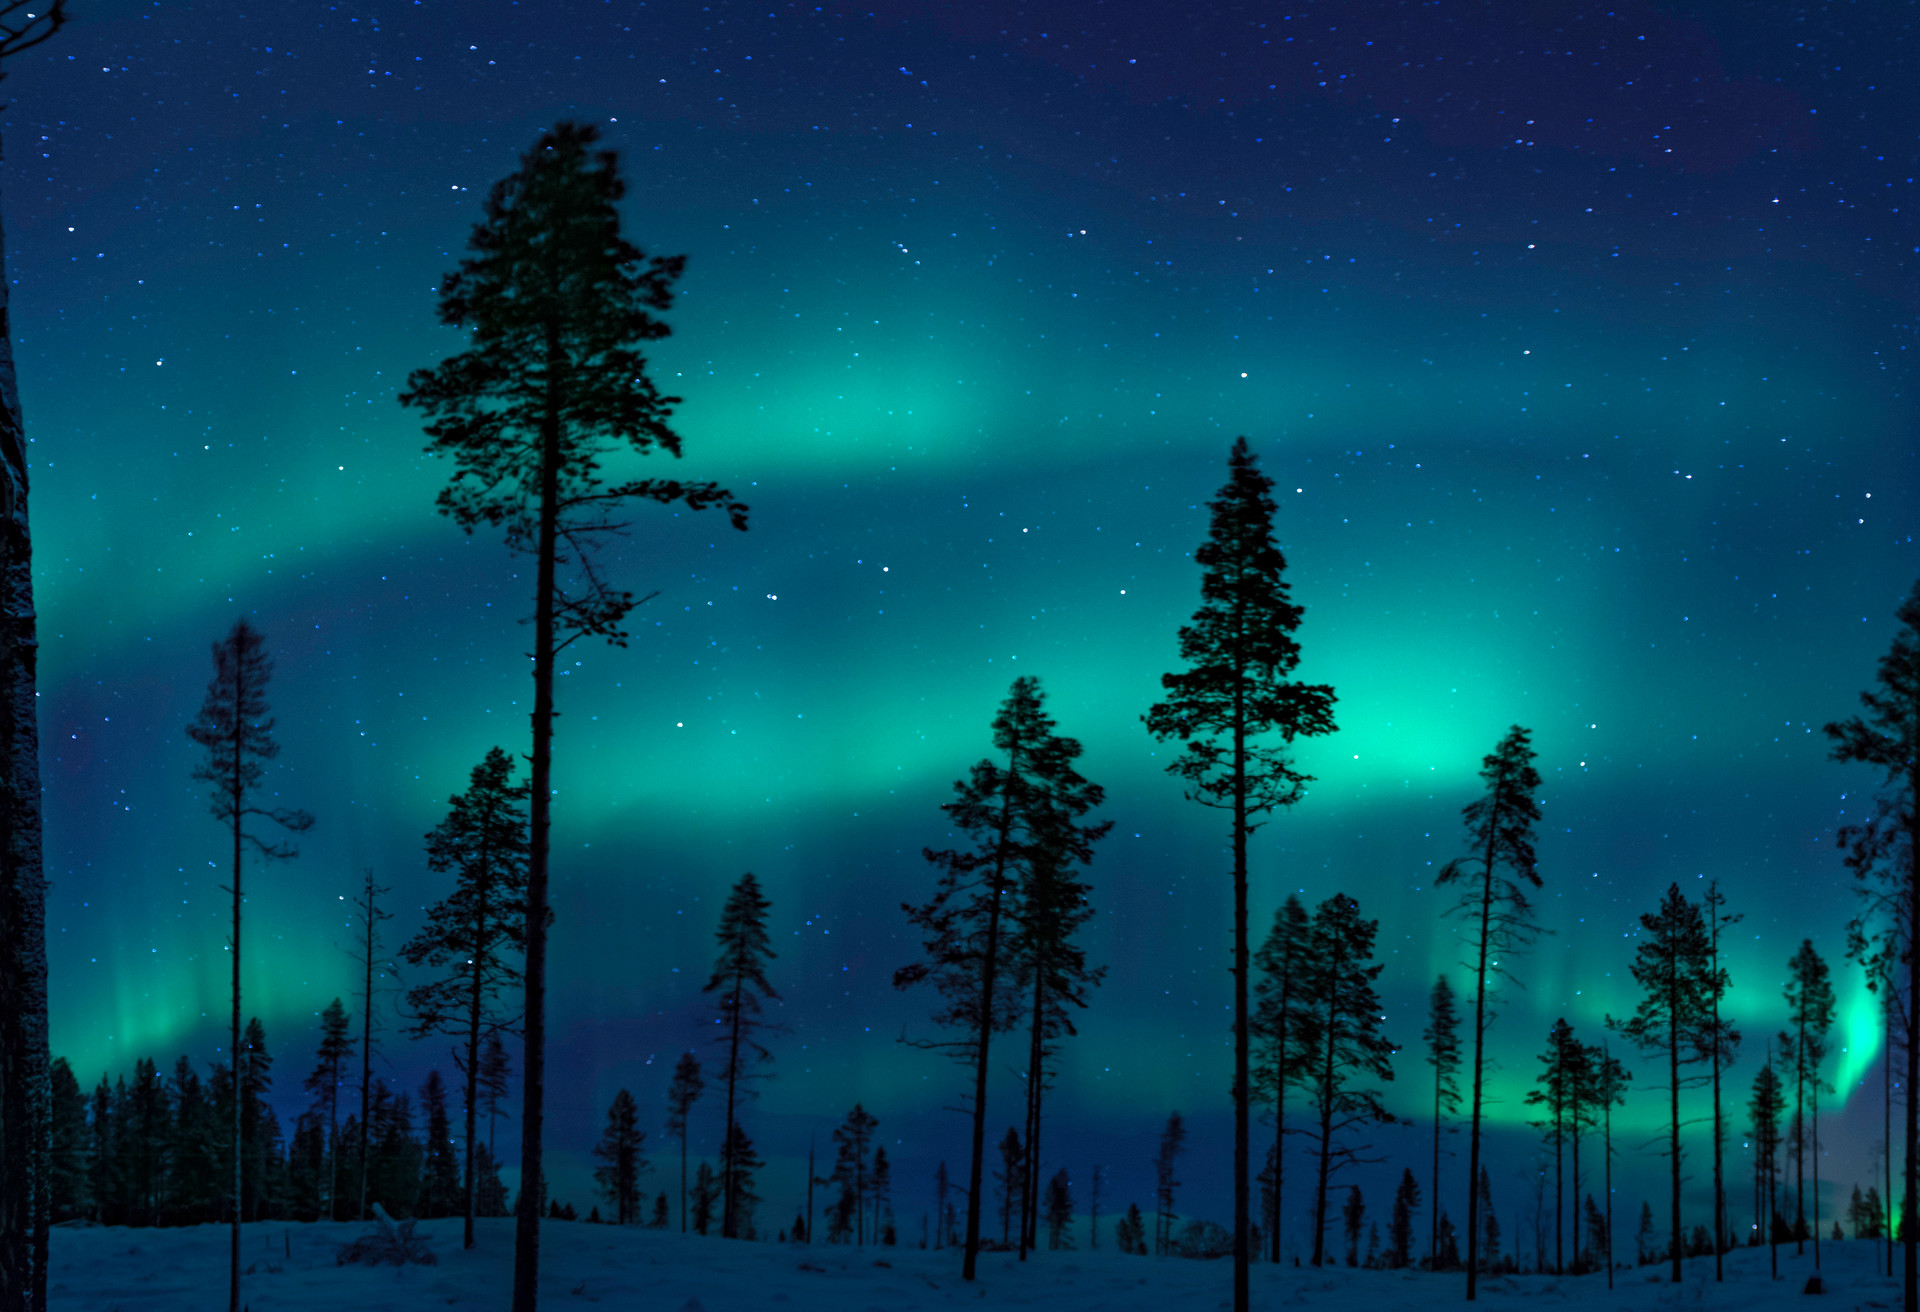 The Aurora Borealis illuminates the night sky within a Swedish forest.